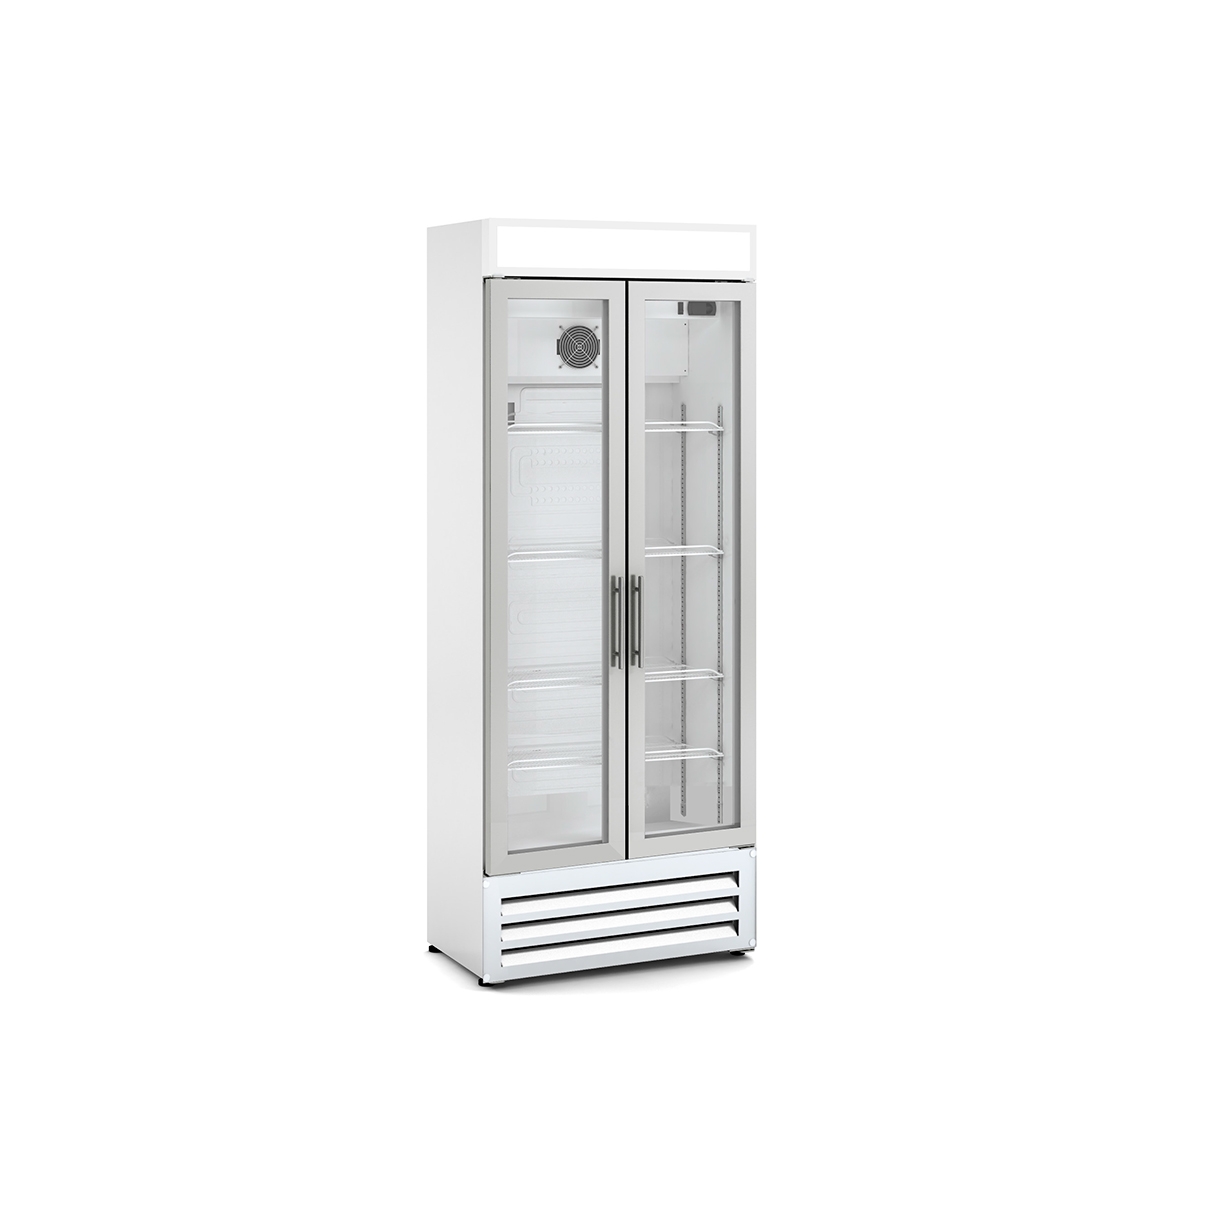 Vertical Refrigerated Display DECCVAR-23